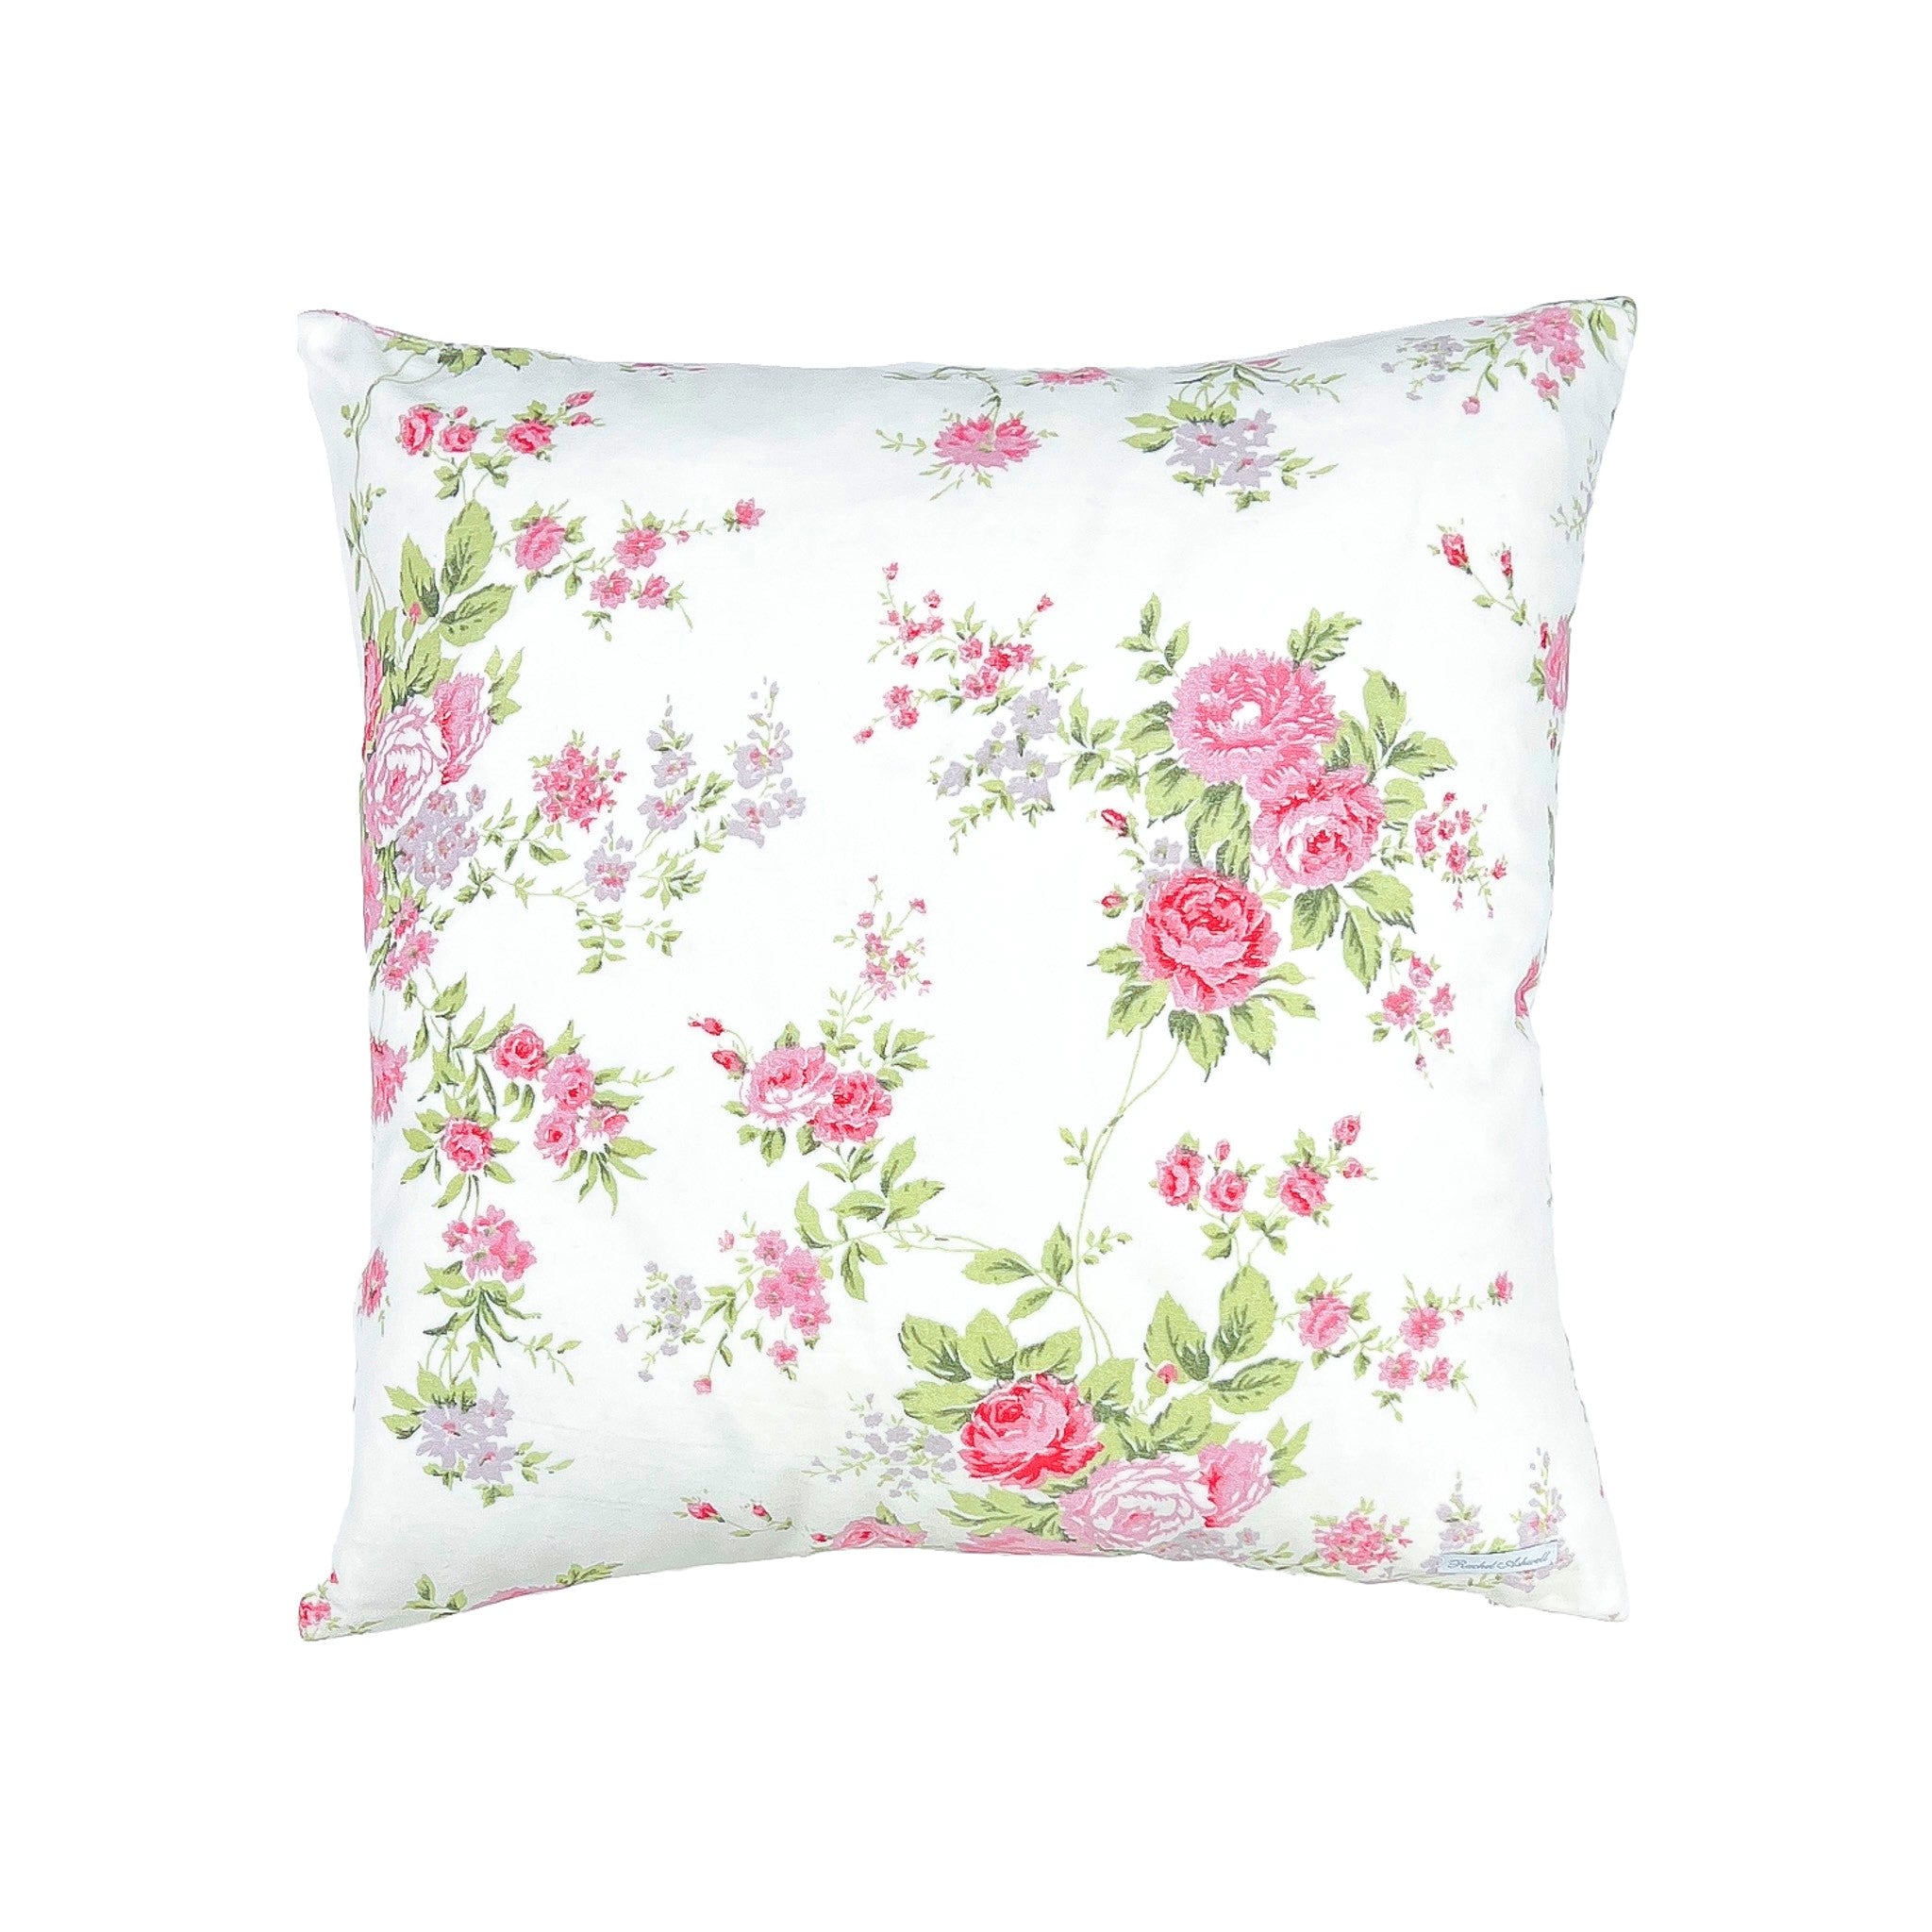 High End Luxury Designer Velvet Floral 'amaranth' Handmade Cushion